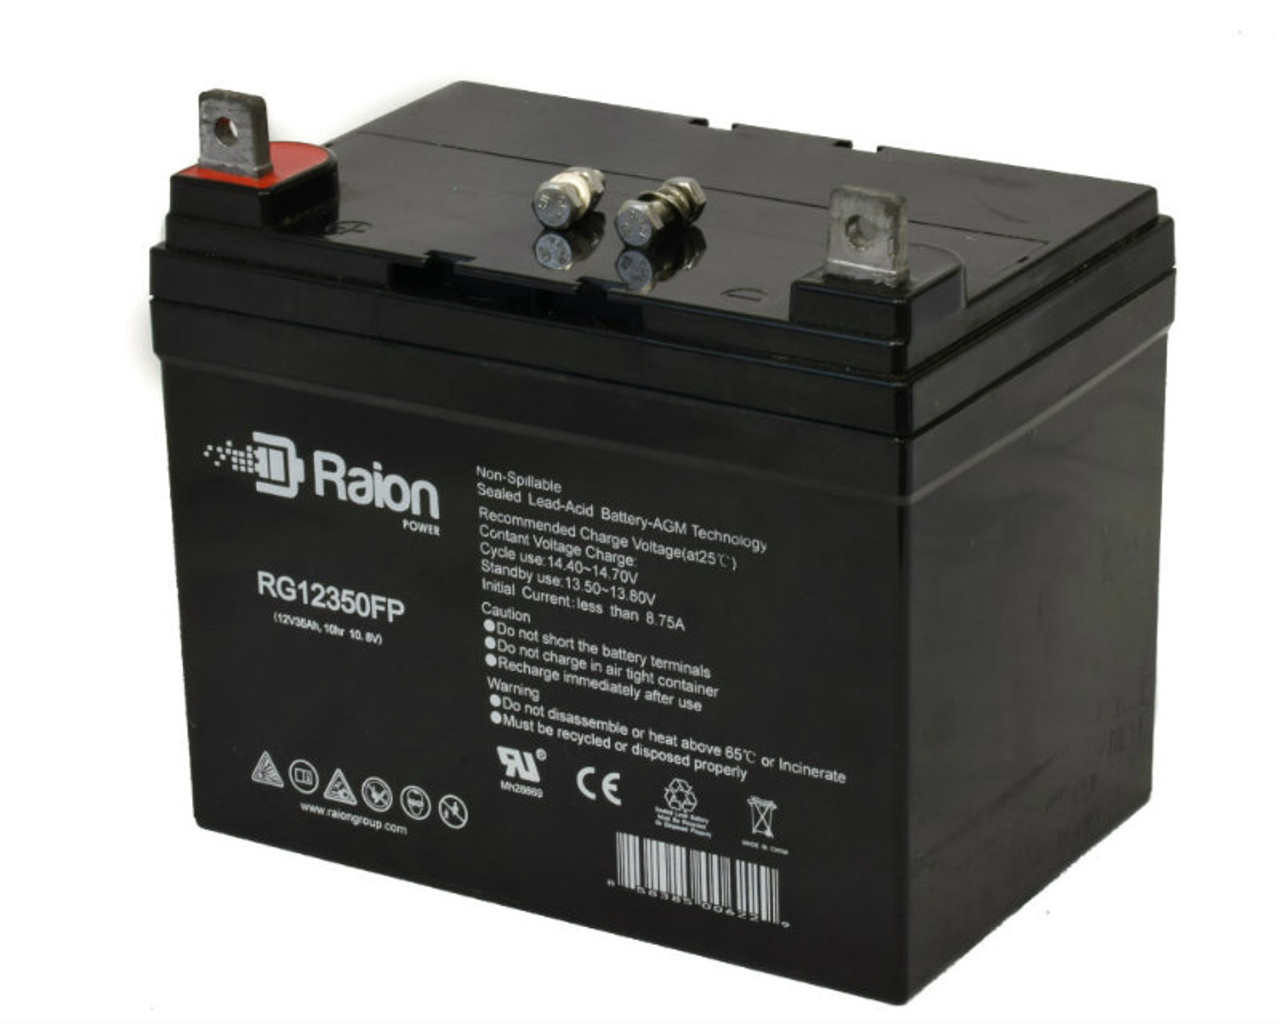 Raion Power Replacement 12V 35Ah RG12350FP Battery for Kubota 2515H